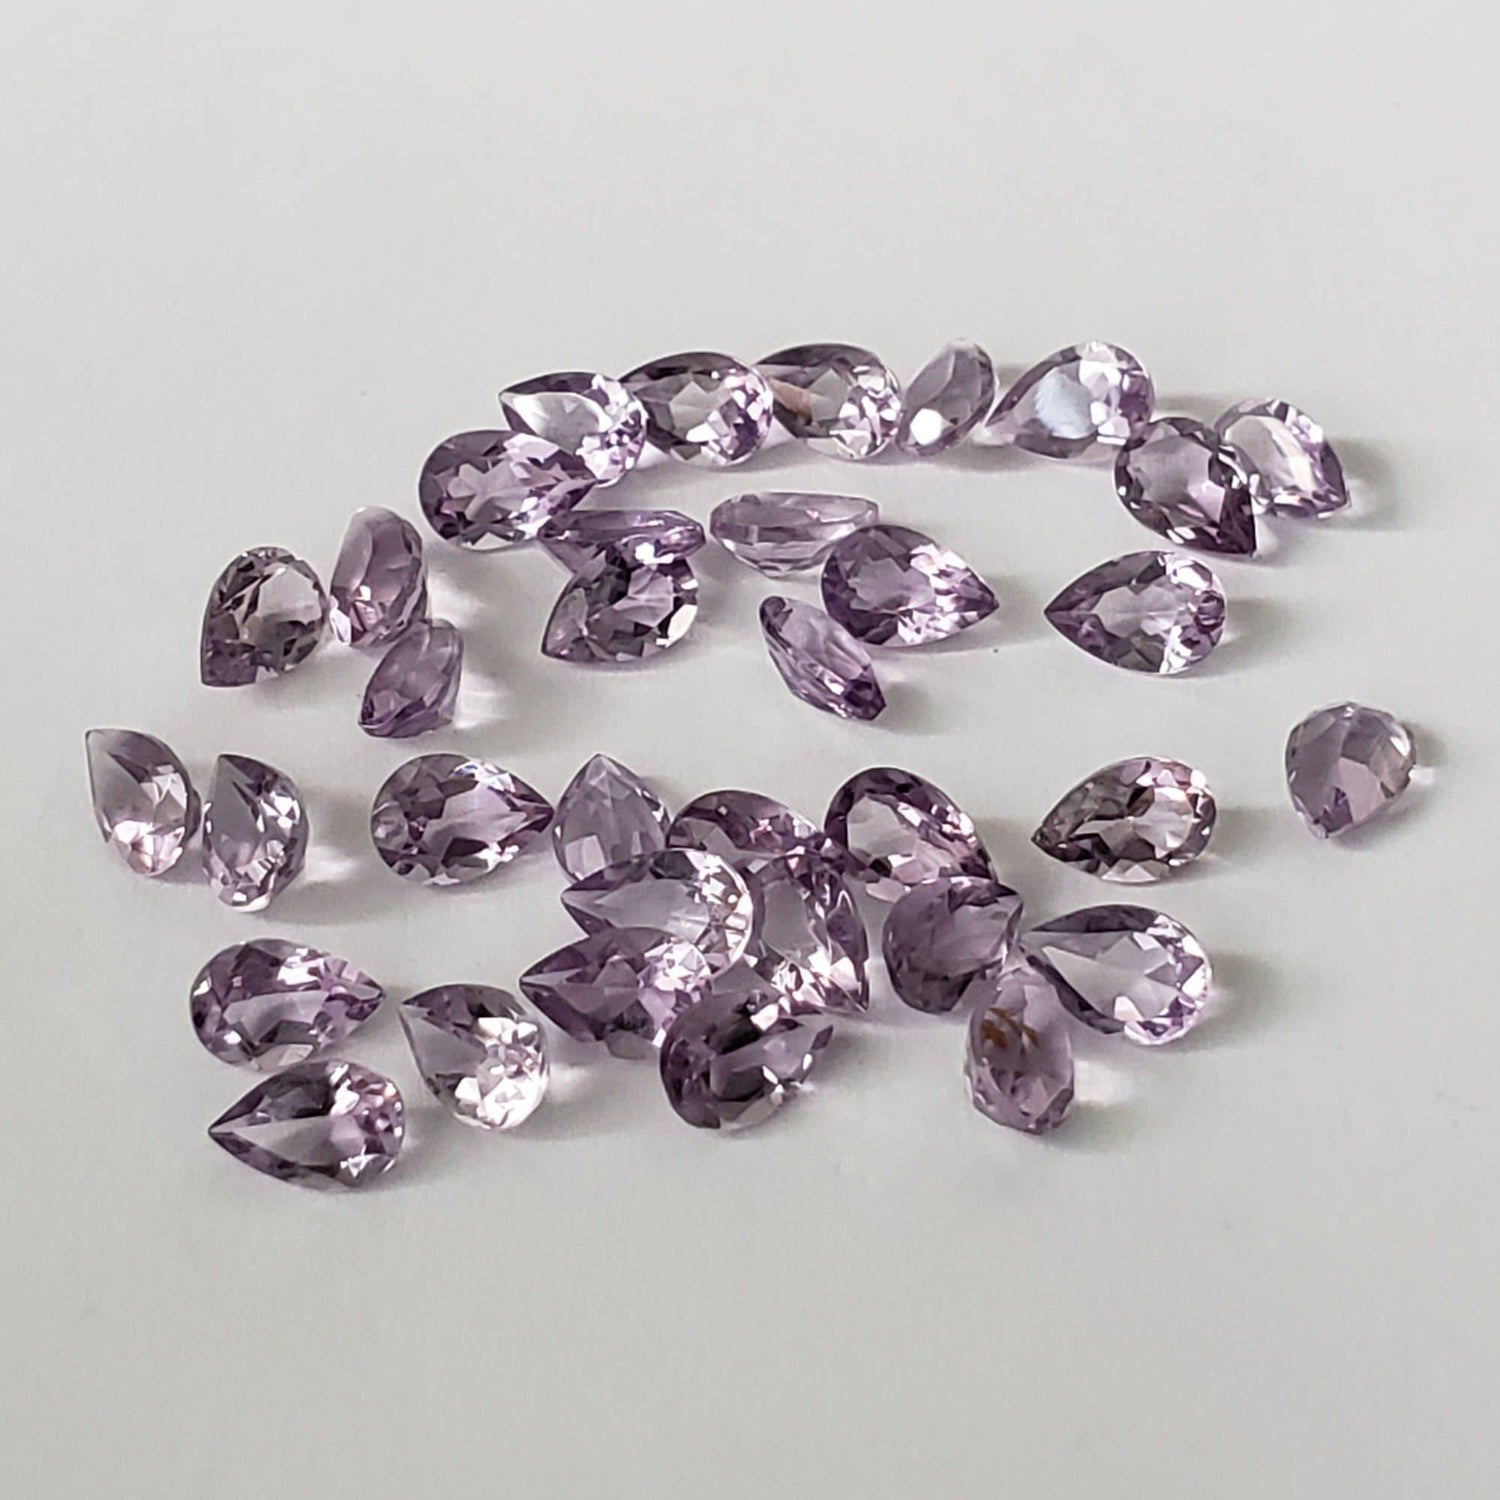 Amethyst | Pear Shape Cut | Bright Purple | 6x4mm